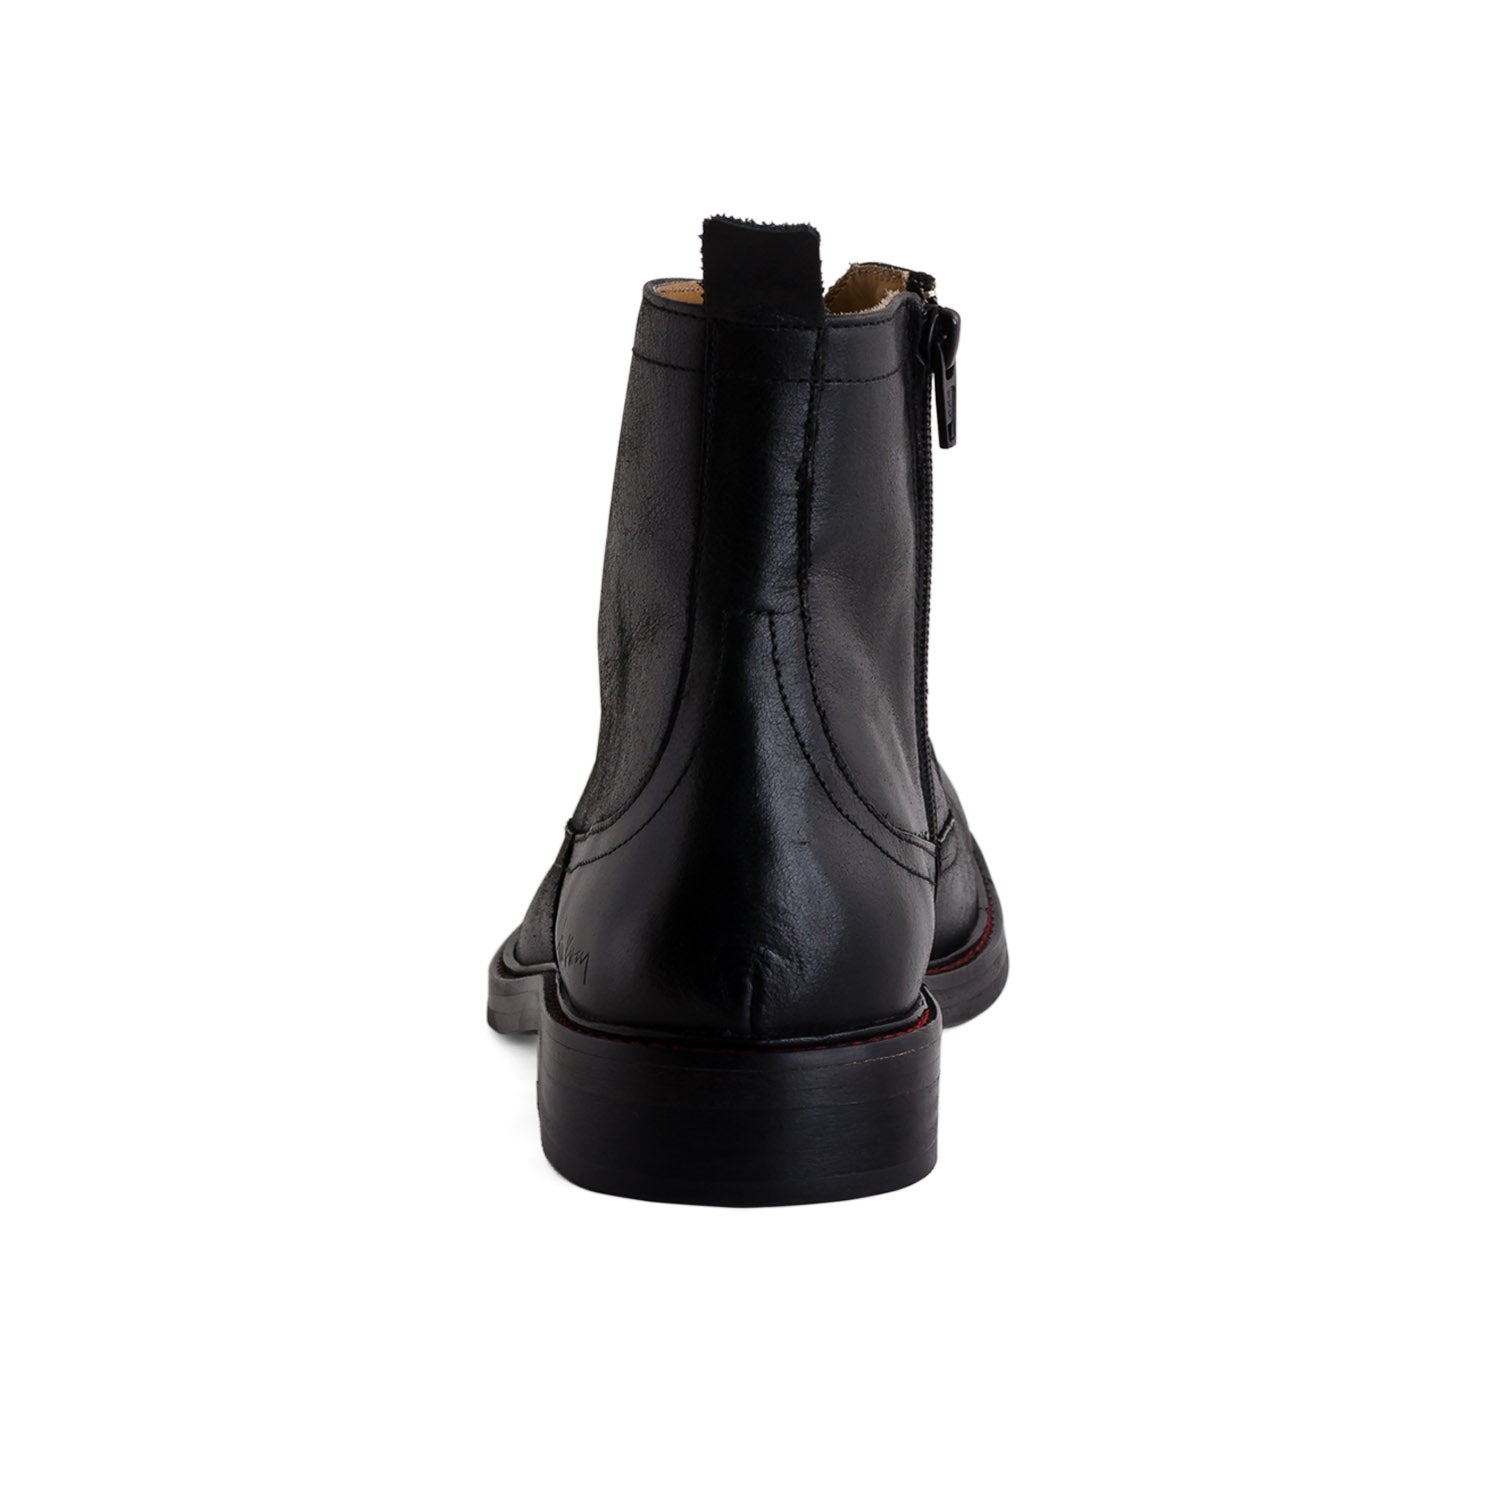 NiK Kacy Dress Boots with Zipper | Gender Neutral, Unisex Shoes